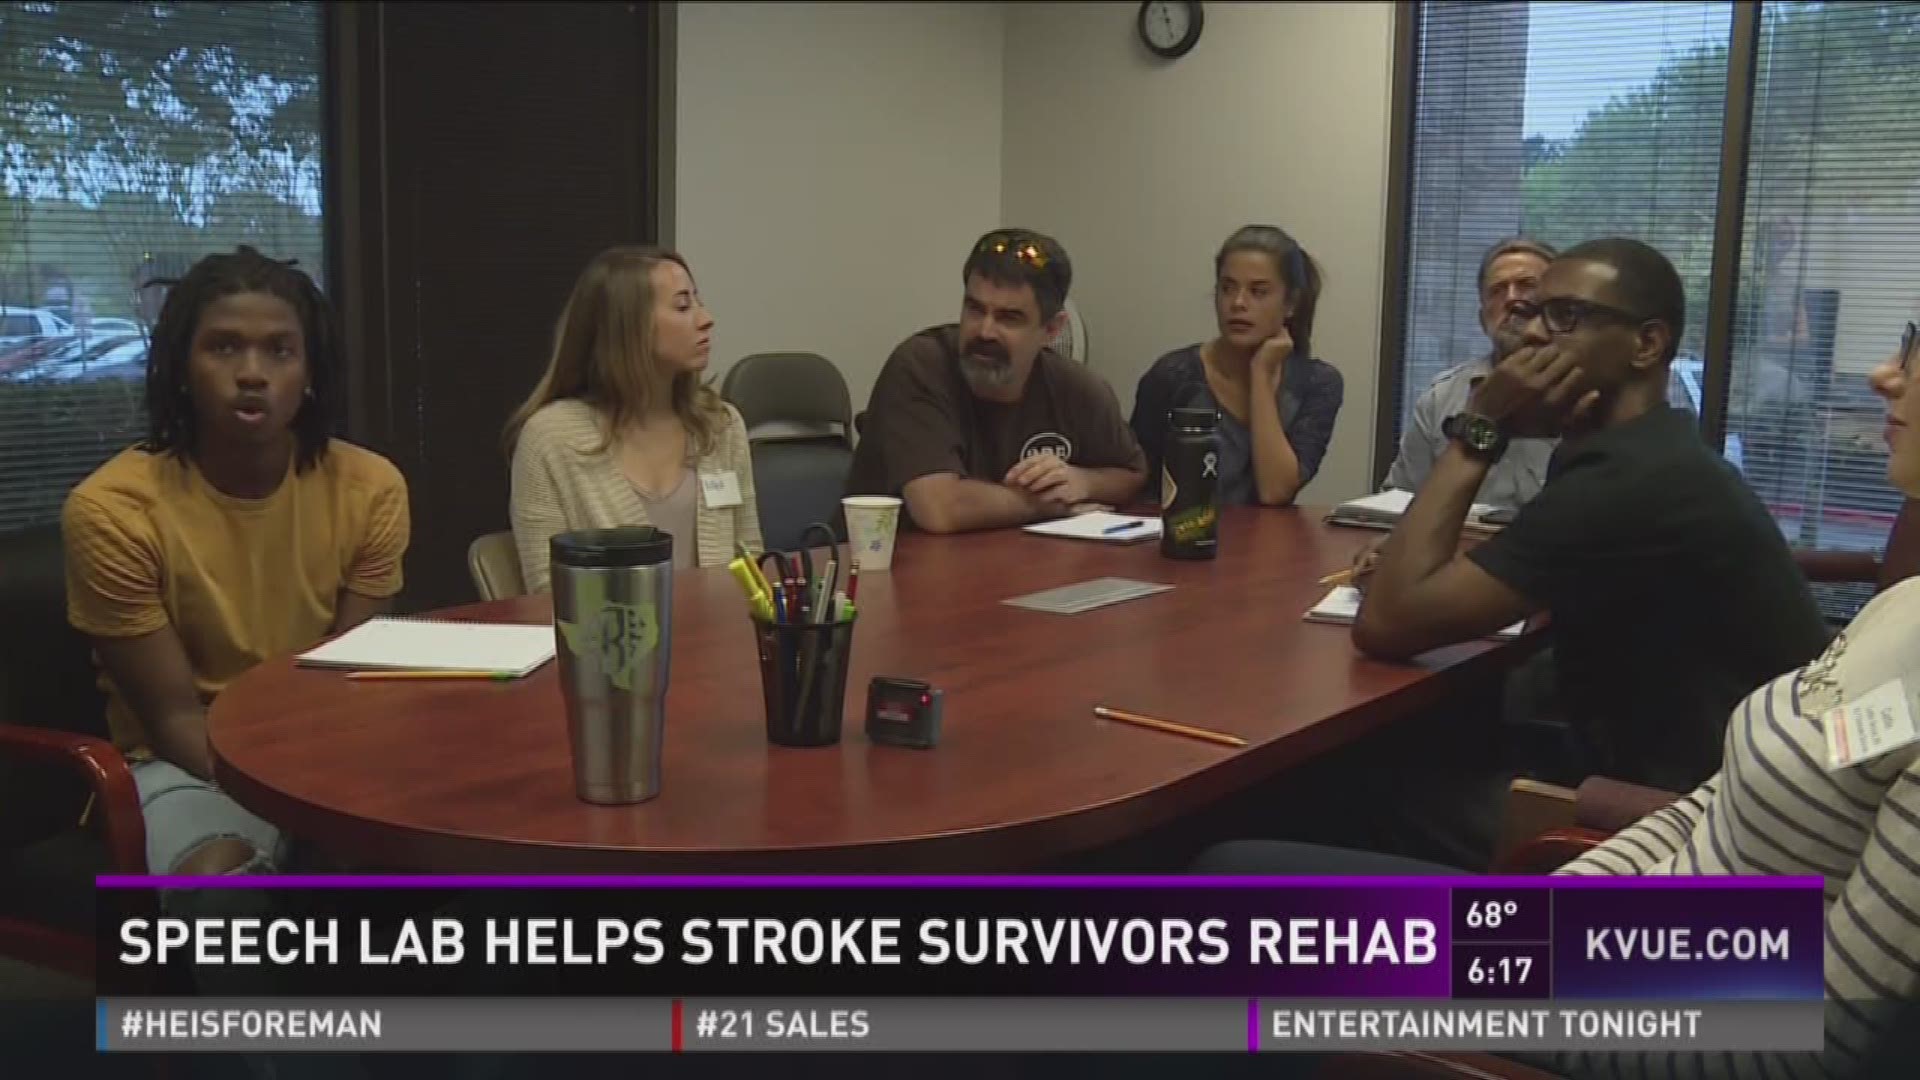 Speech lab helps stroke survivors rehab